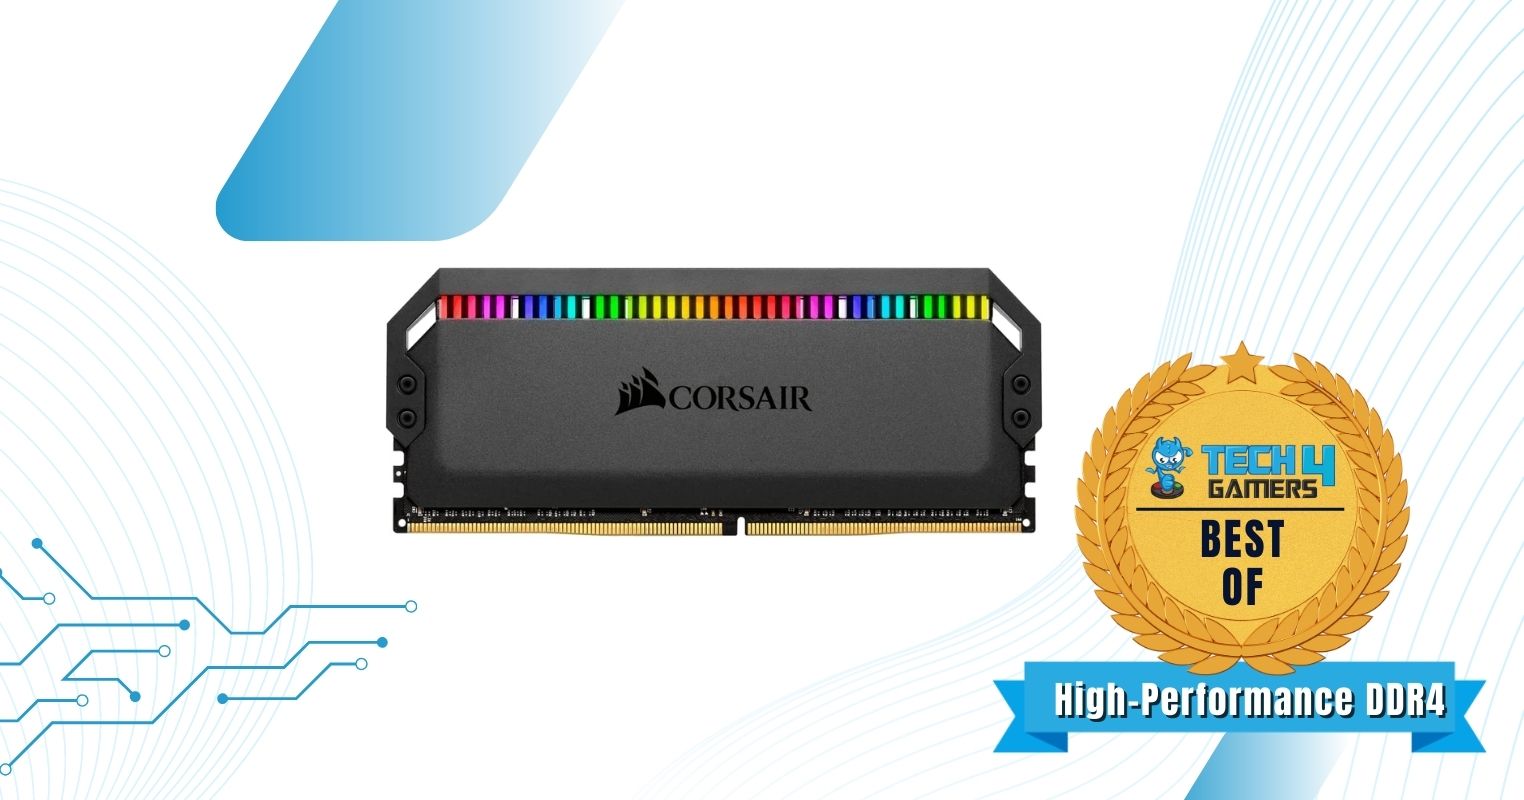 Corsair Dominator Platinum RGB 4000MHz CAS18 - Best High-Performance DDR4 RAM